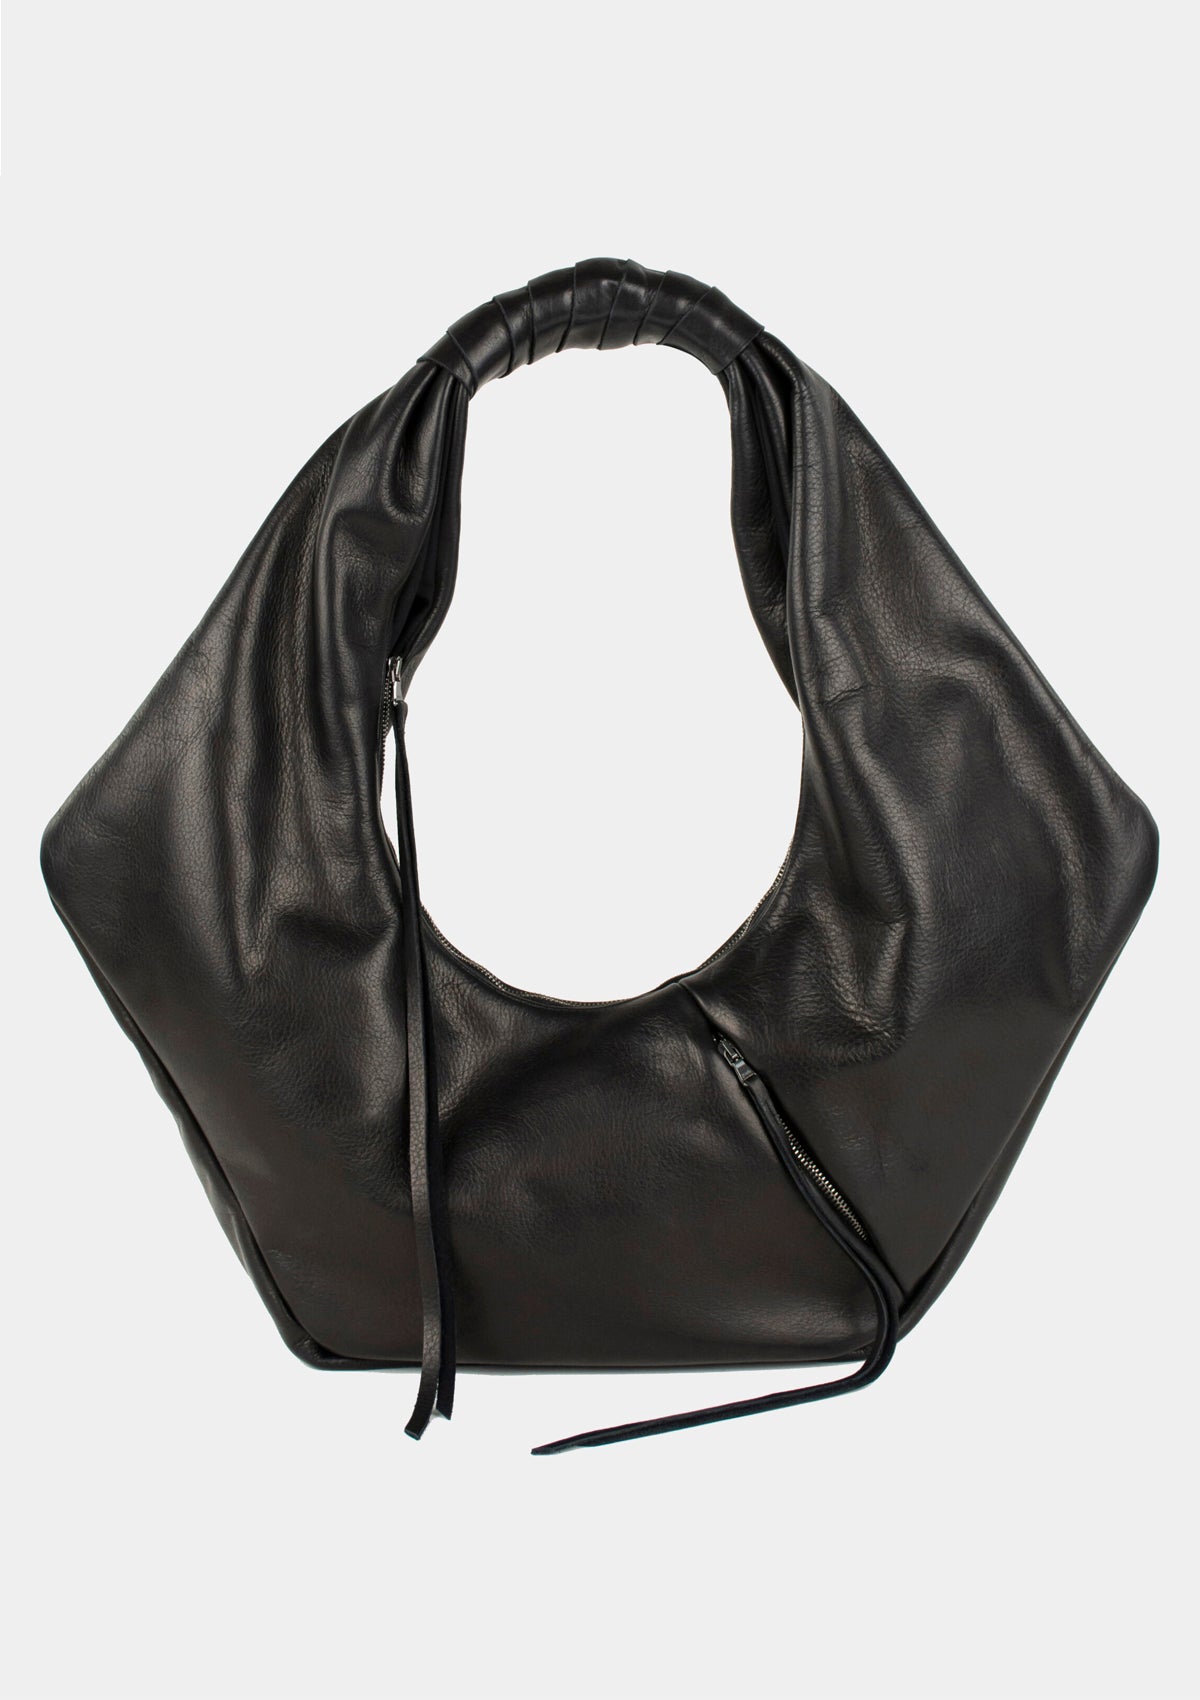 Sullivan Black Leather Tote Soho Bag women fashion accessories